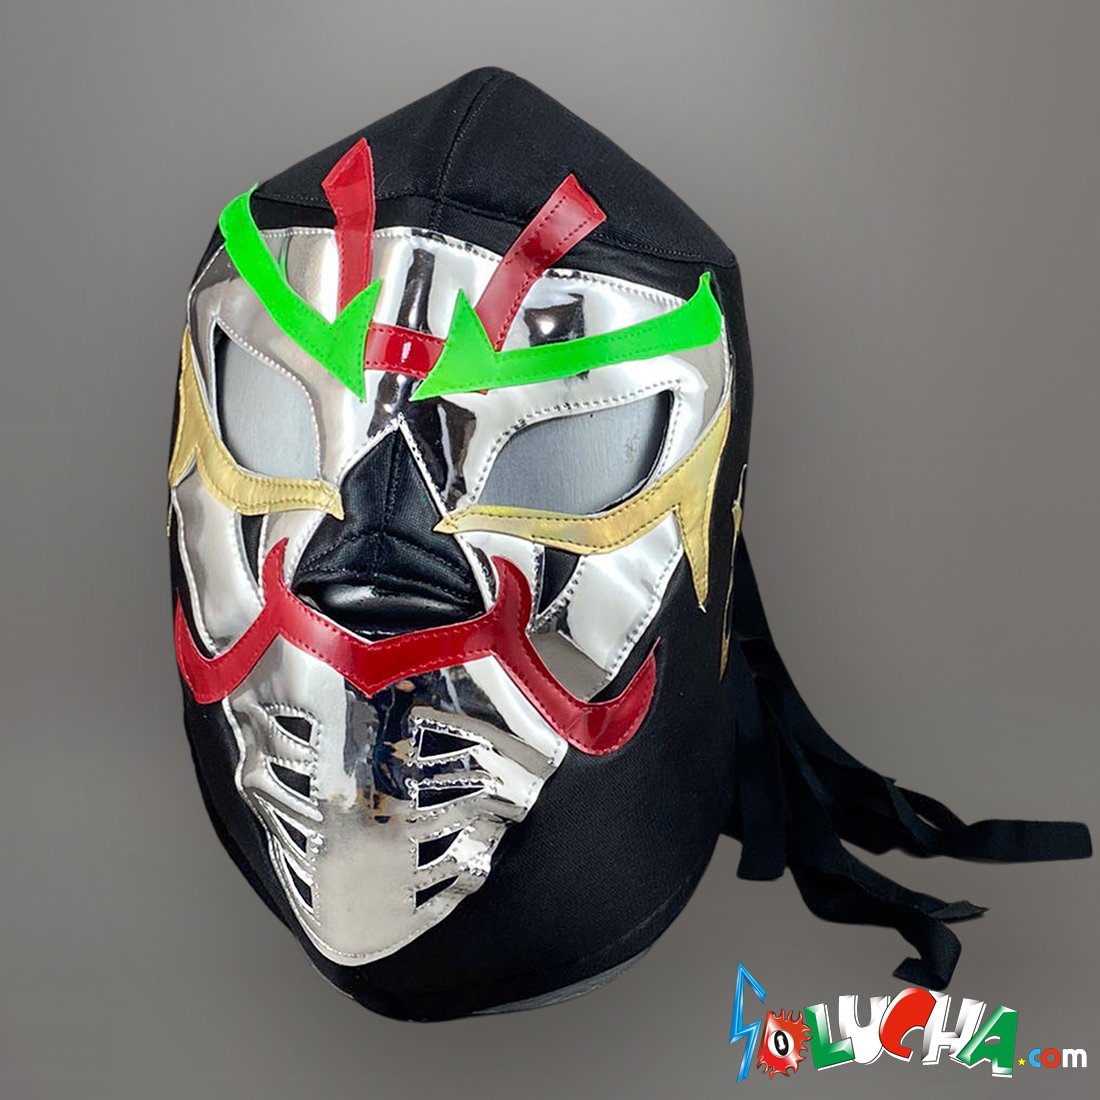 SOLUCHA.com / 《メキシコ製応援用マスク》 ザ・グレート・サスケ